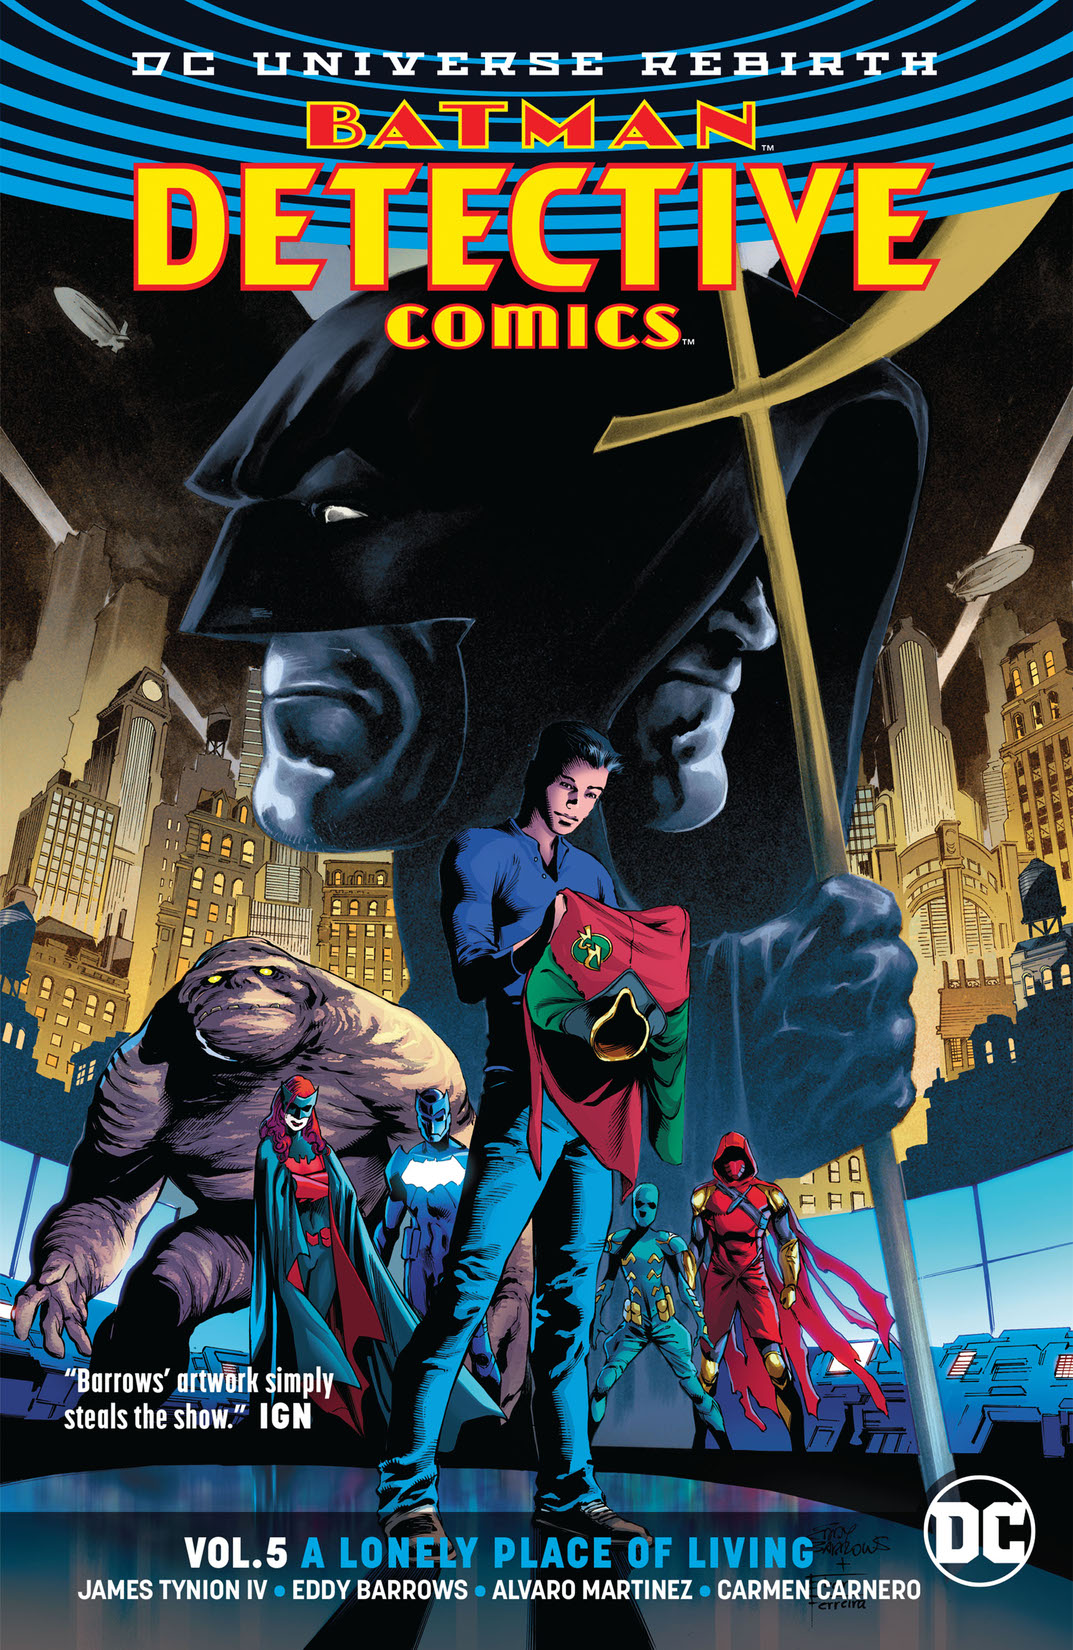 Batman - Detective Comics Vol. 5: A Lonely Place of Living  preview images